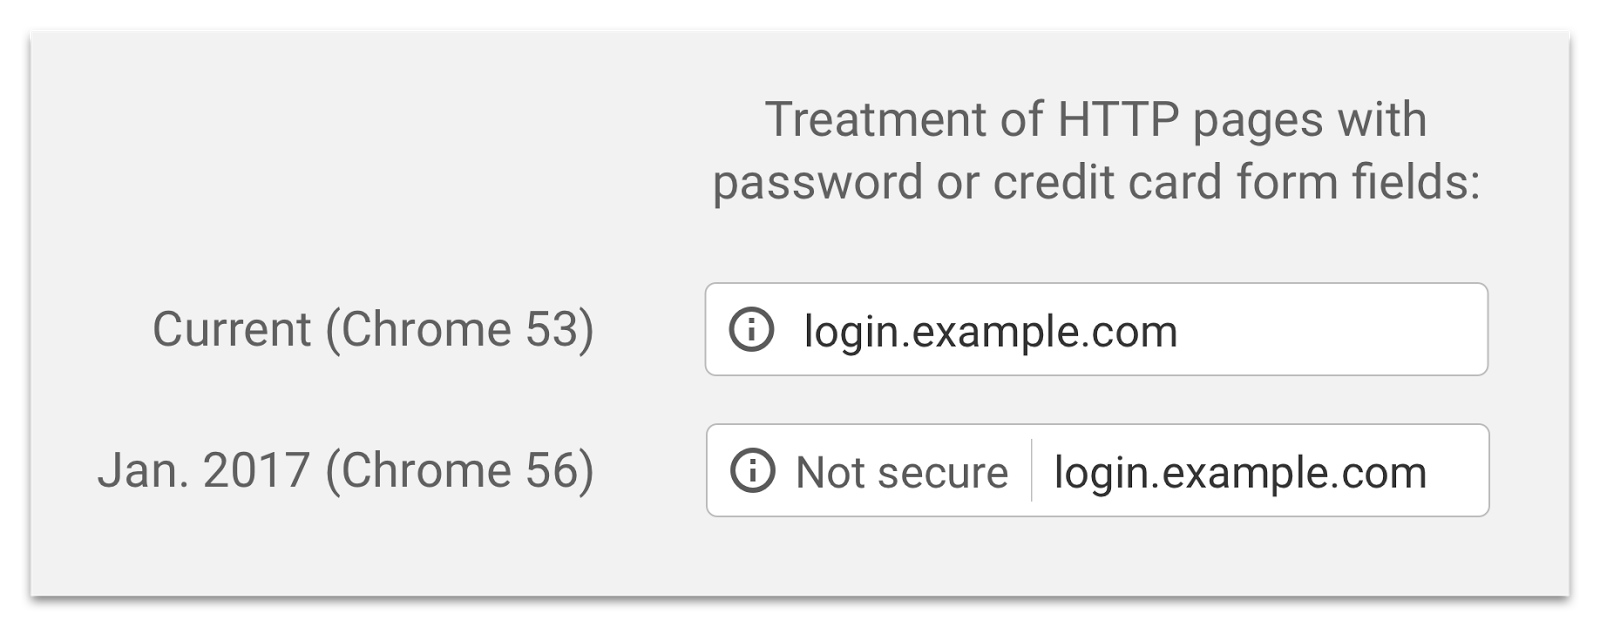 HTTPSimage 1